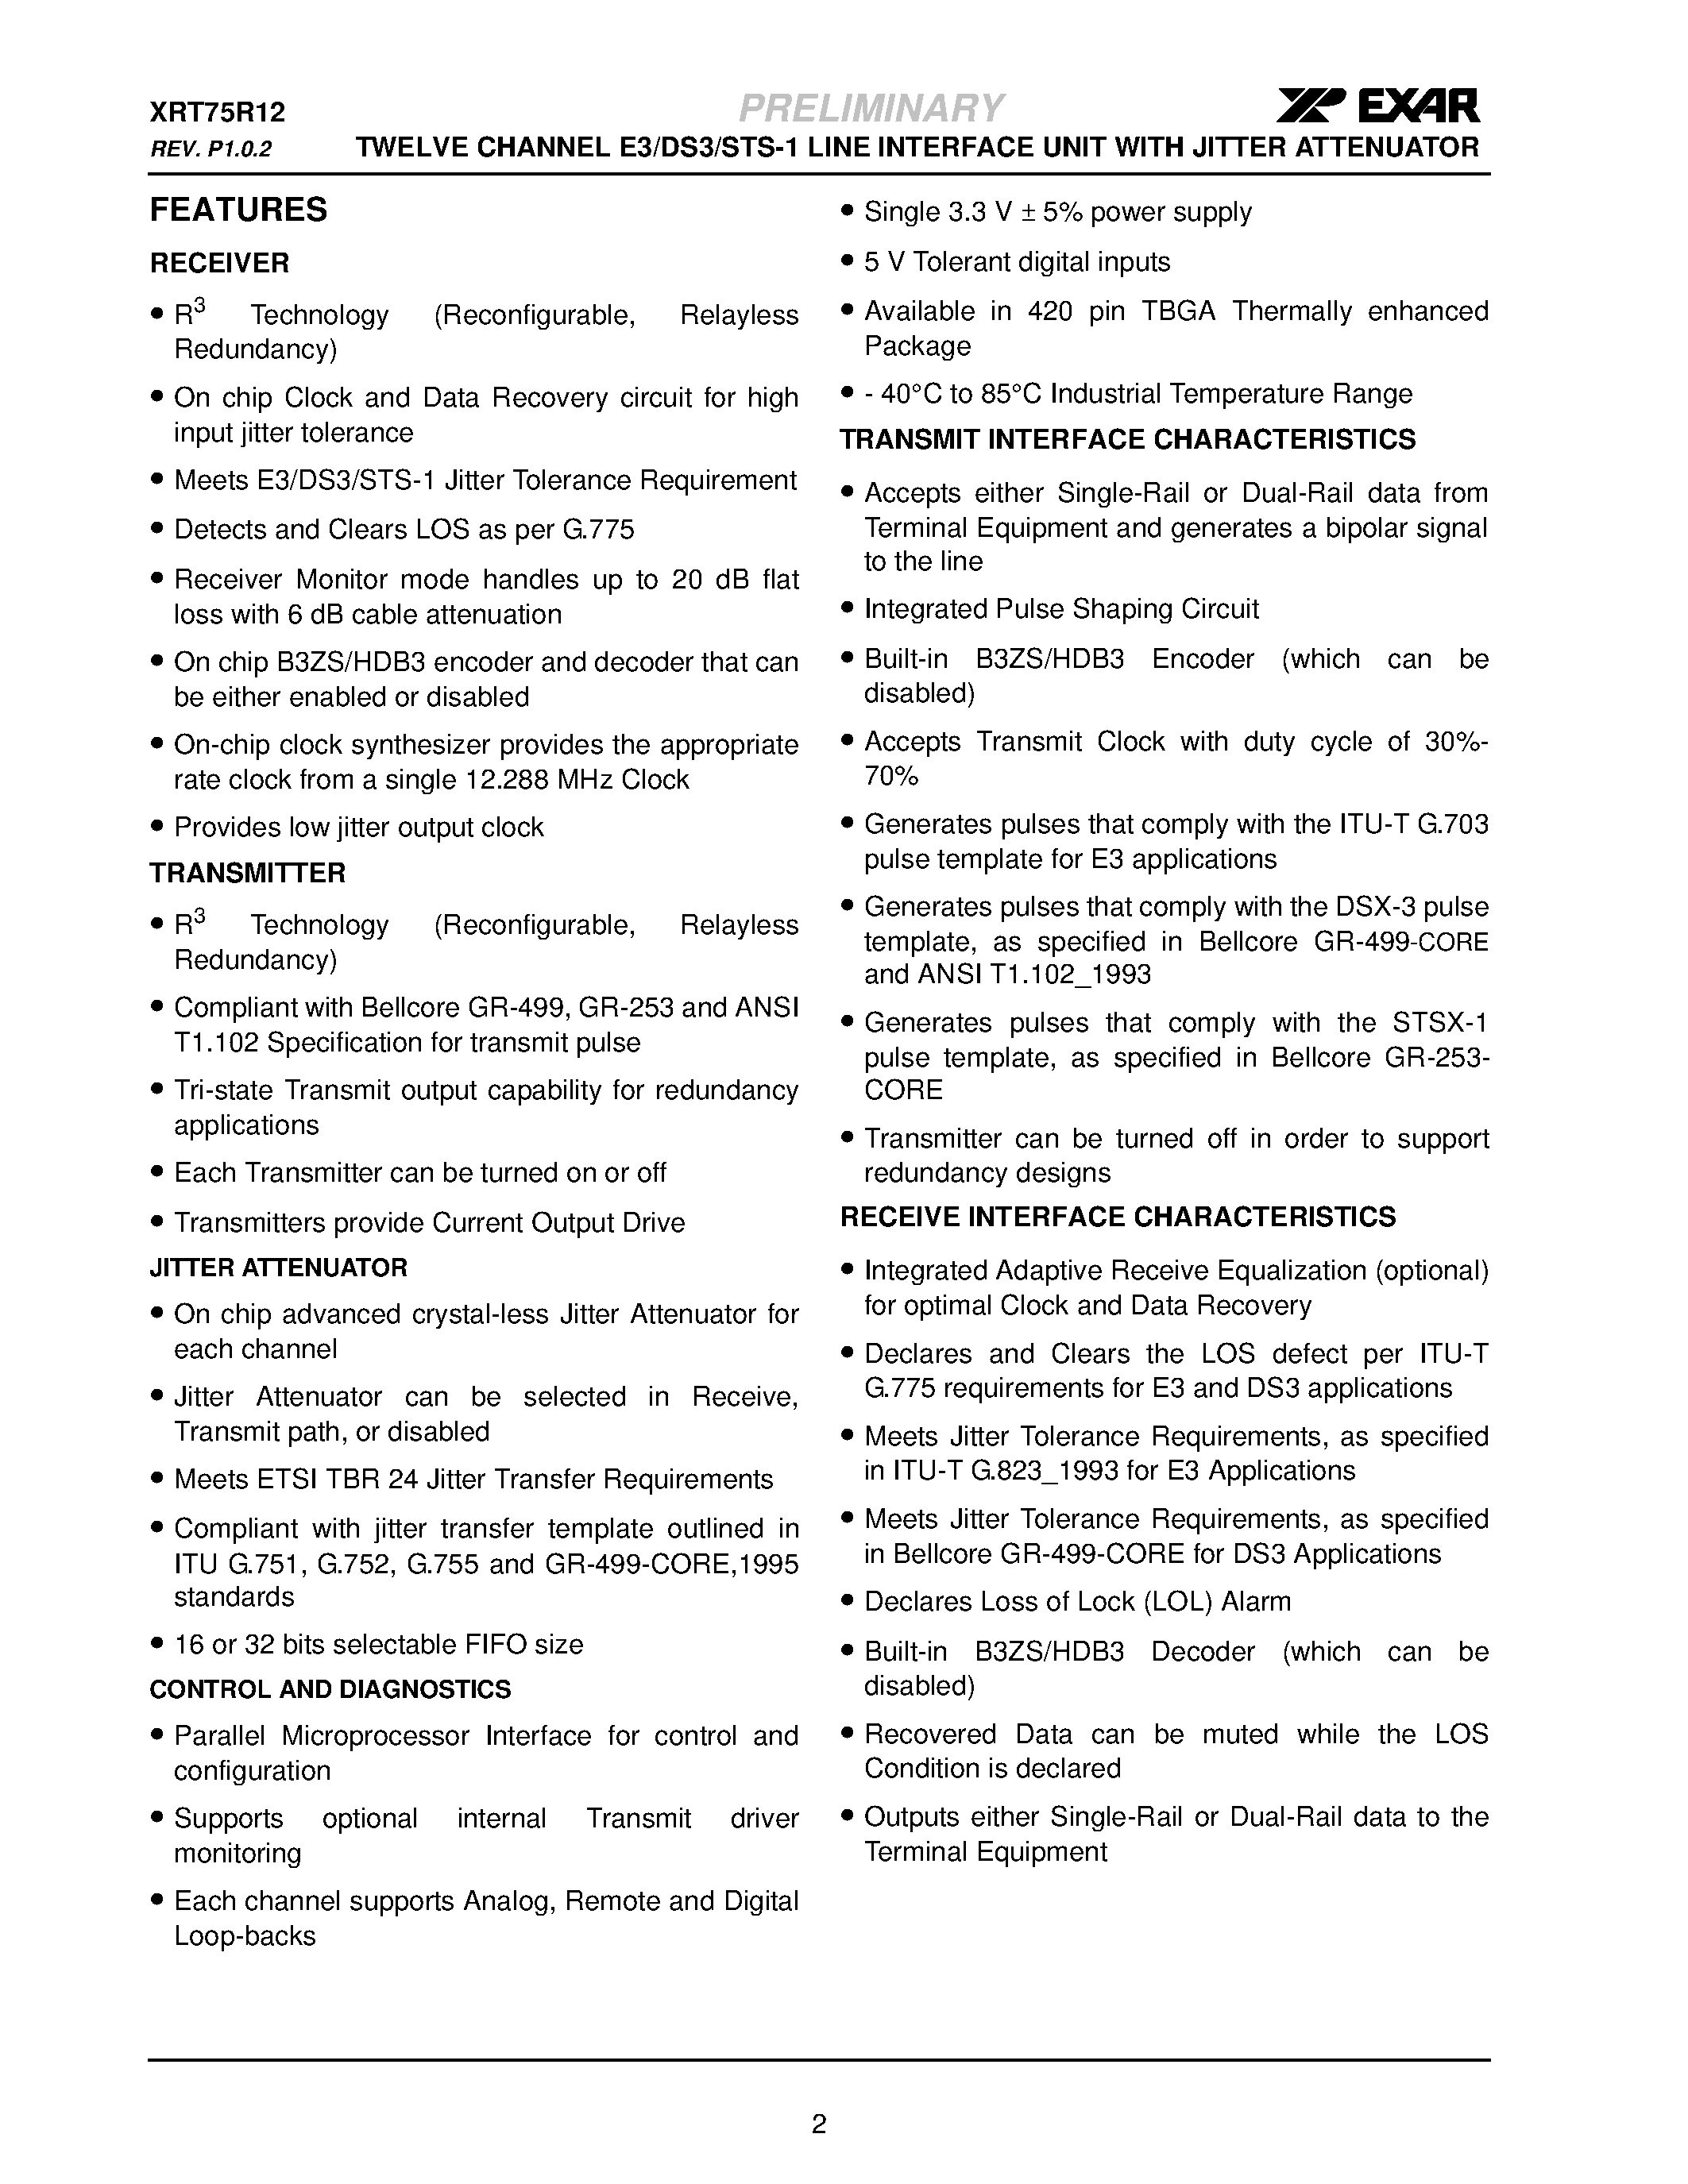 Datasheet XRT75R12 - TWELVE CHANNEL E3/DS3/STS-1 LINE INTERFACE UNIT page 2